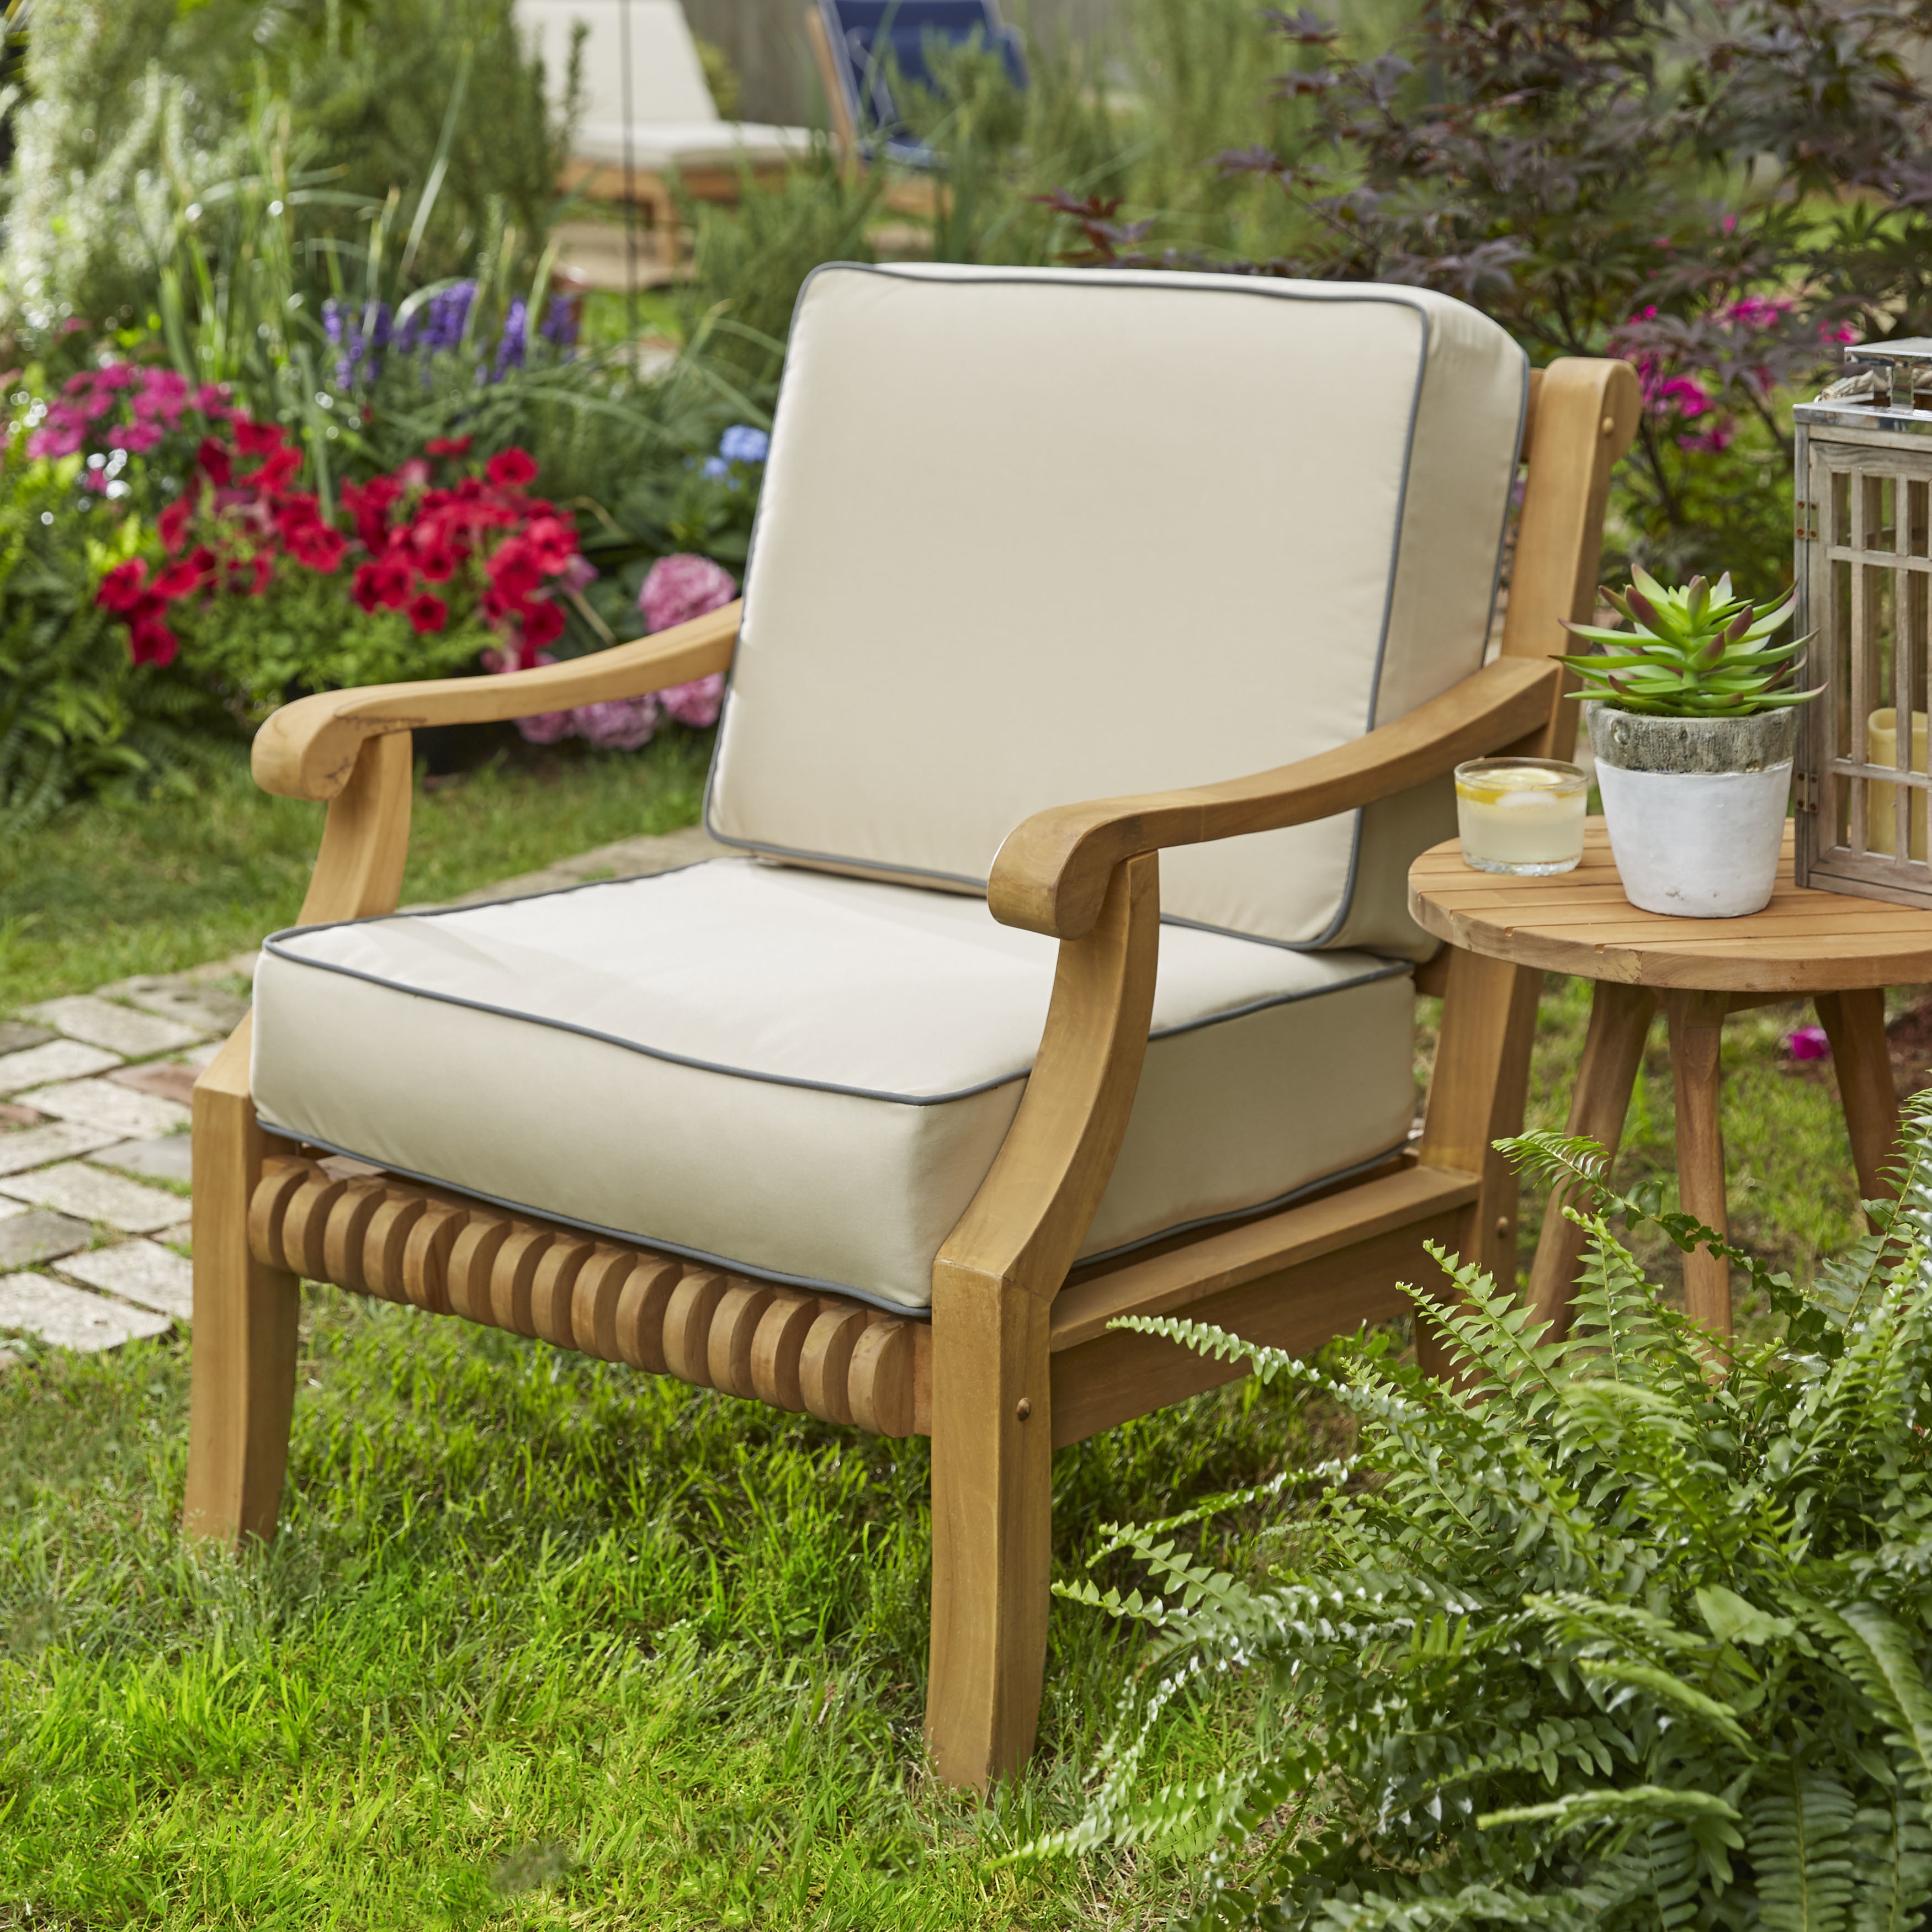 Kokomo Teak Lounge Chair Cushion Set with Sunbrella Fabric | eBay